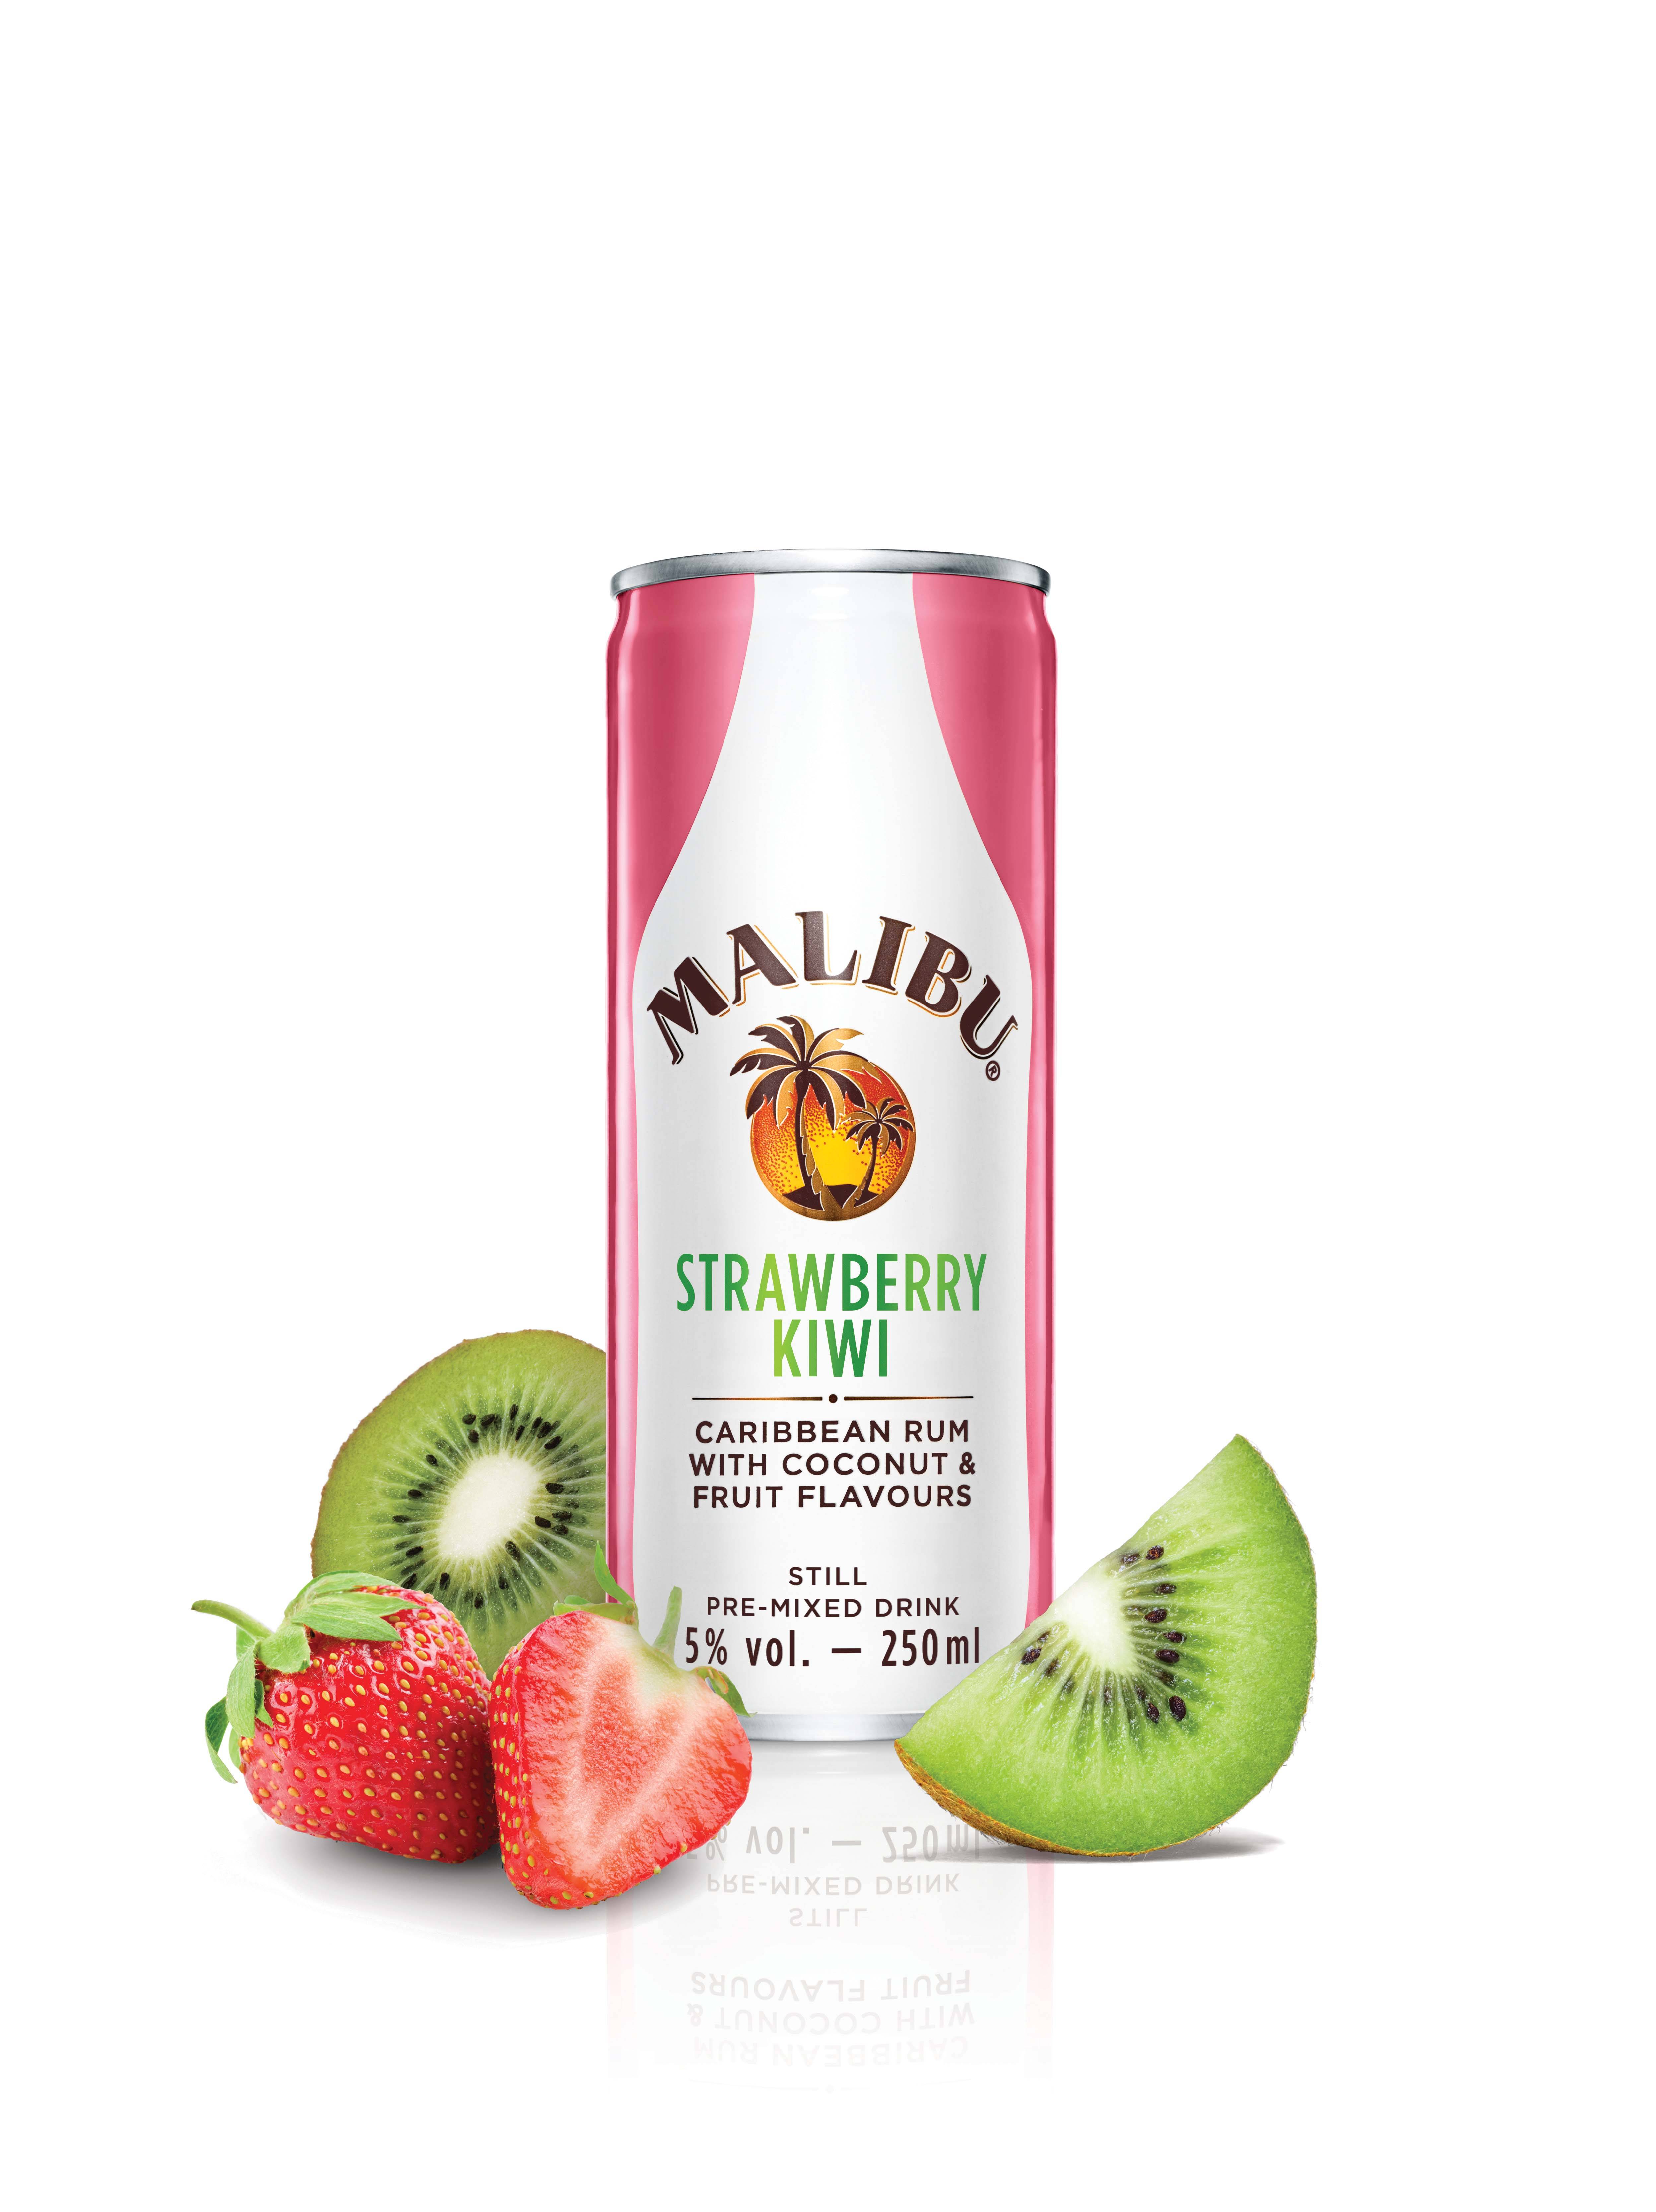 Malibu Strawberry Kiwi joins can range